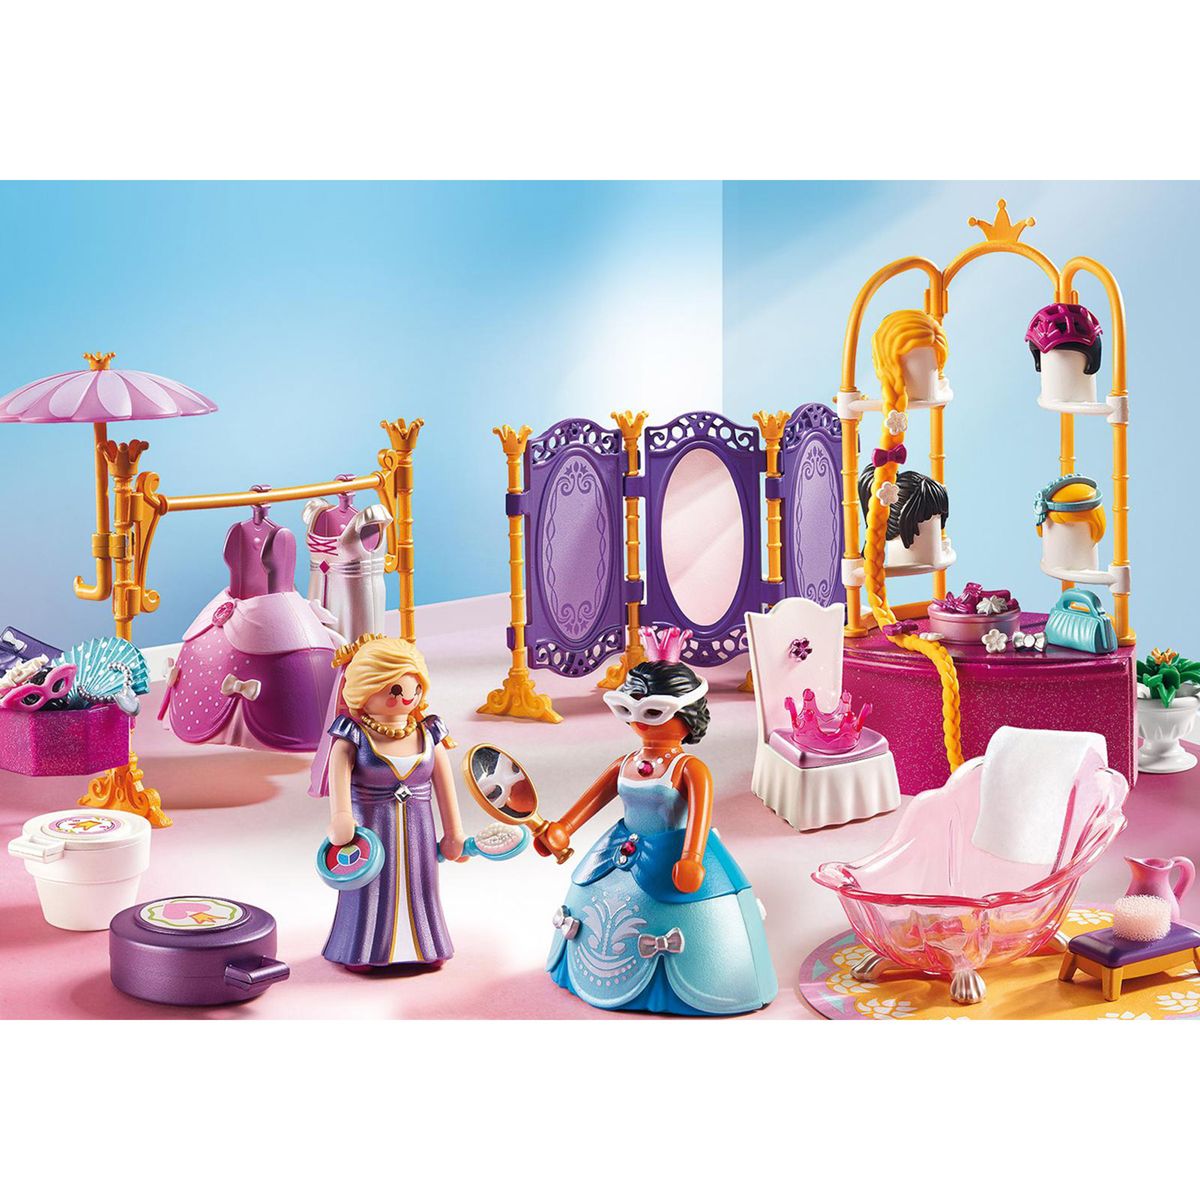 salon de beauté princesse playmobil 6850